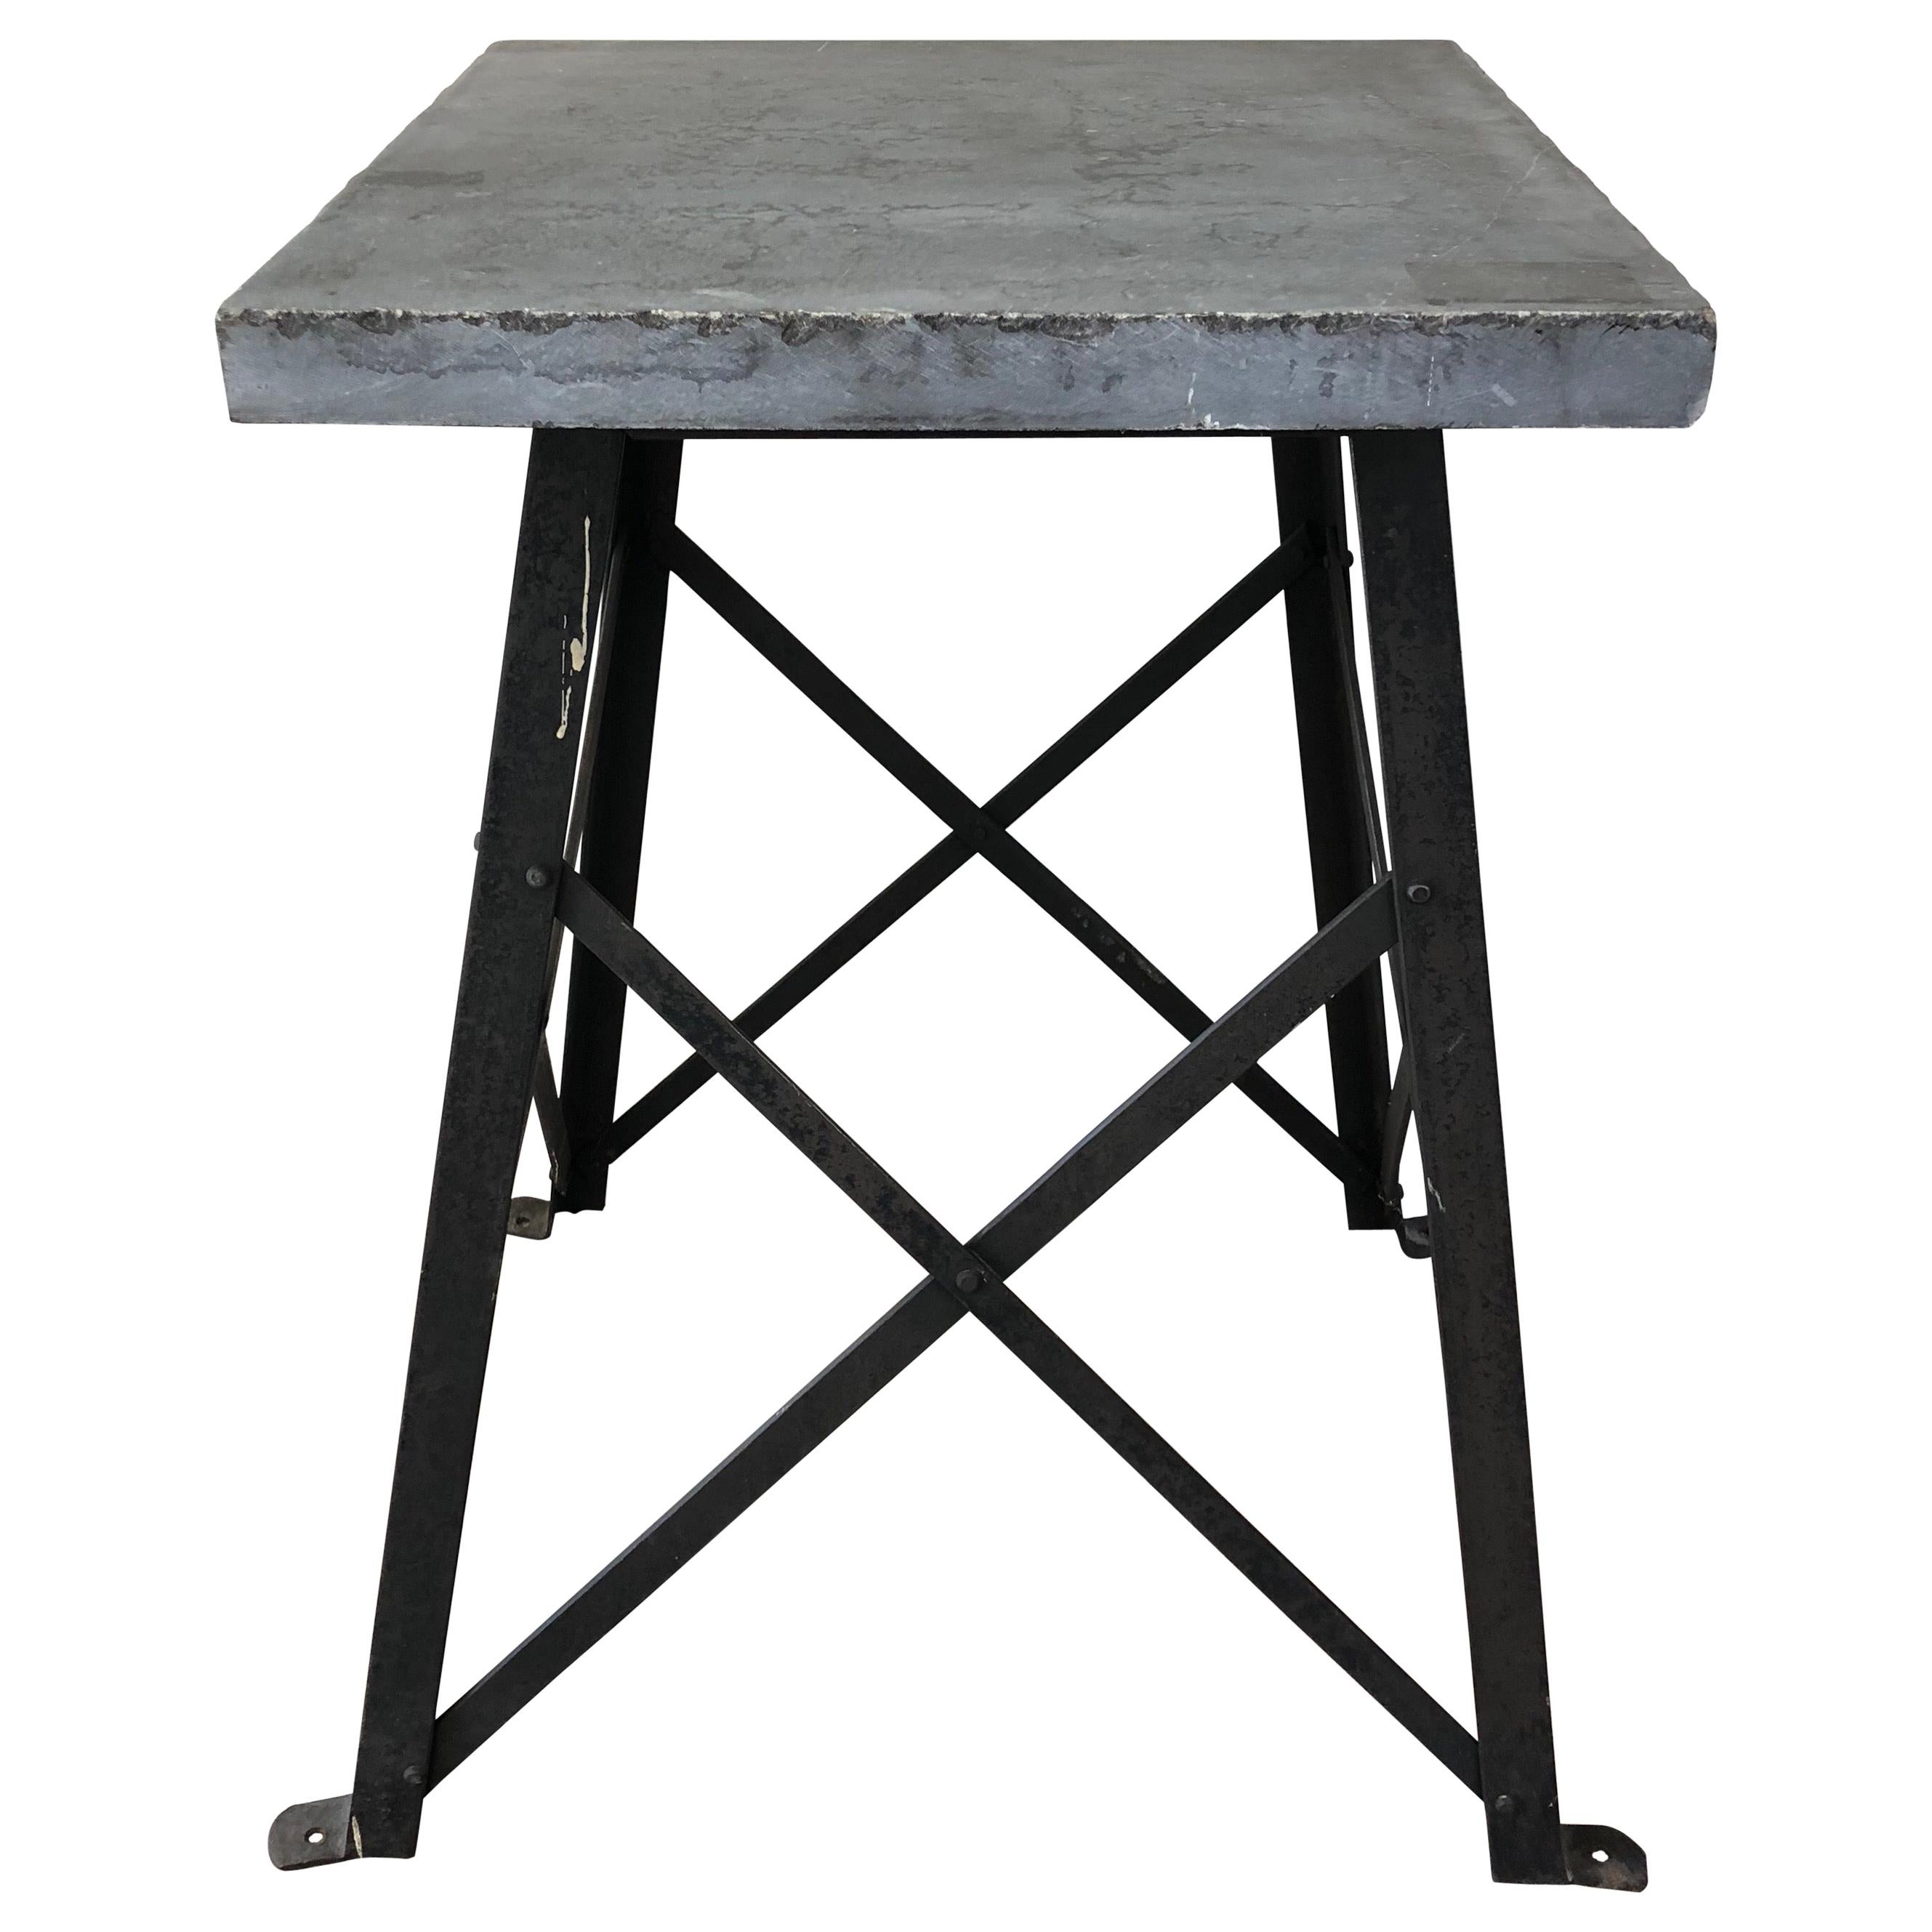 Vintage Steel Trestle Table or Pedestal with Slate Top